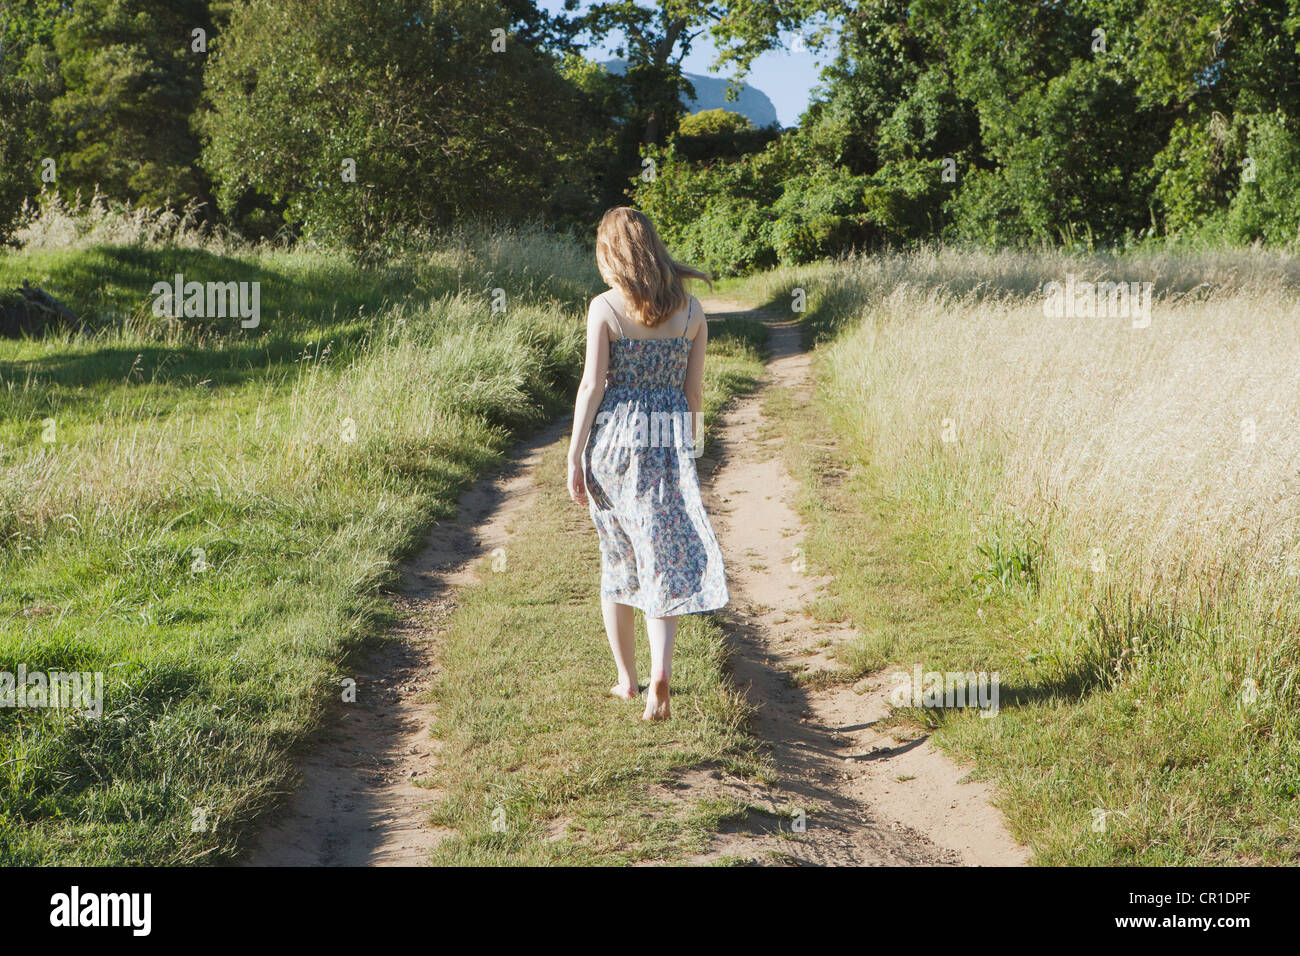 Teenage girl walking on dirt path Stock Photo